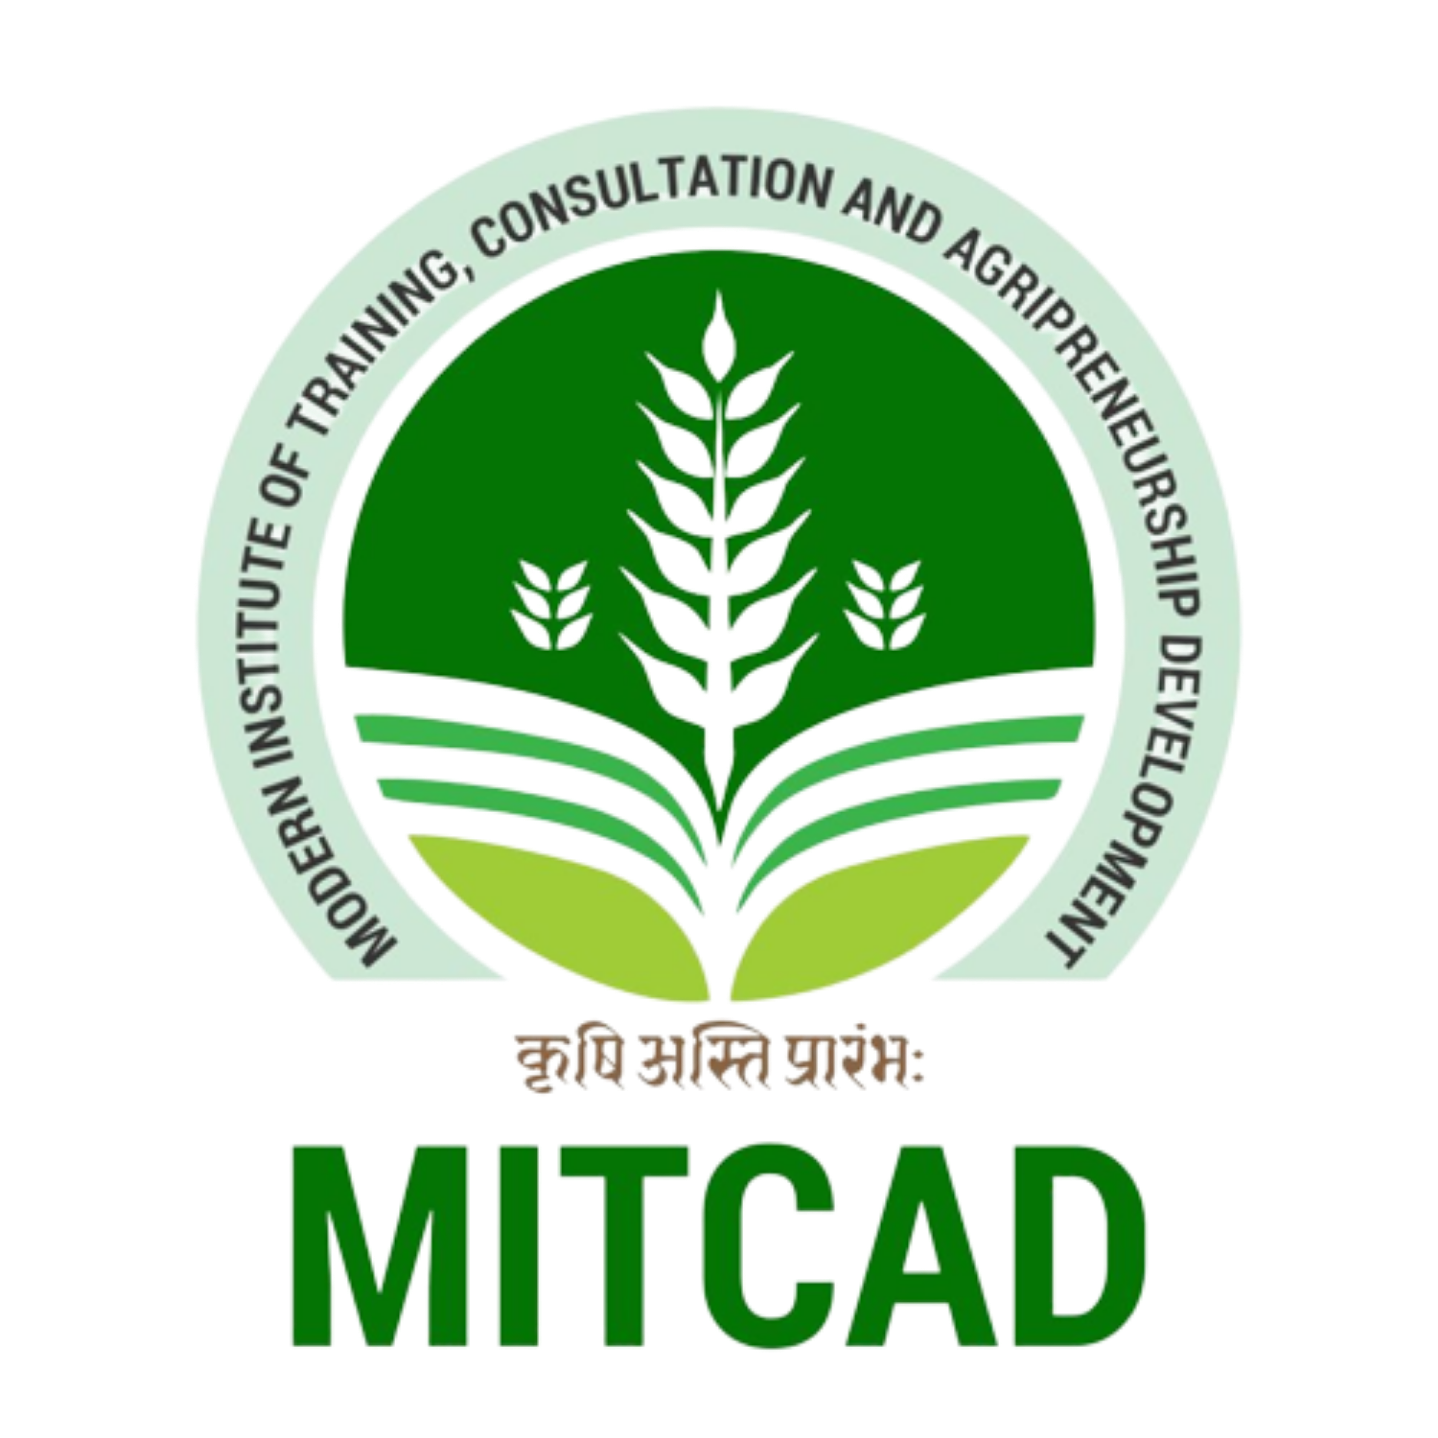 MITCAD